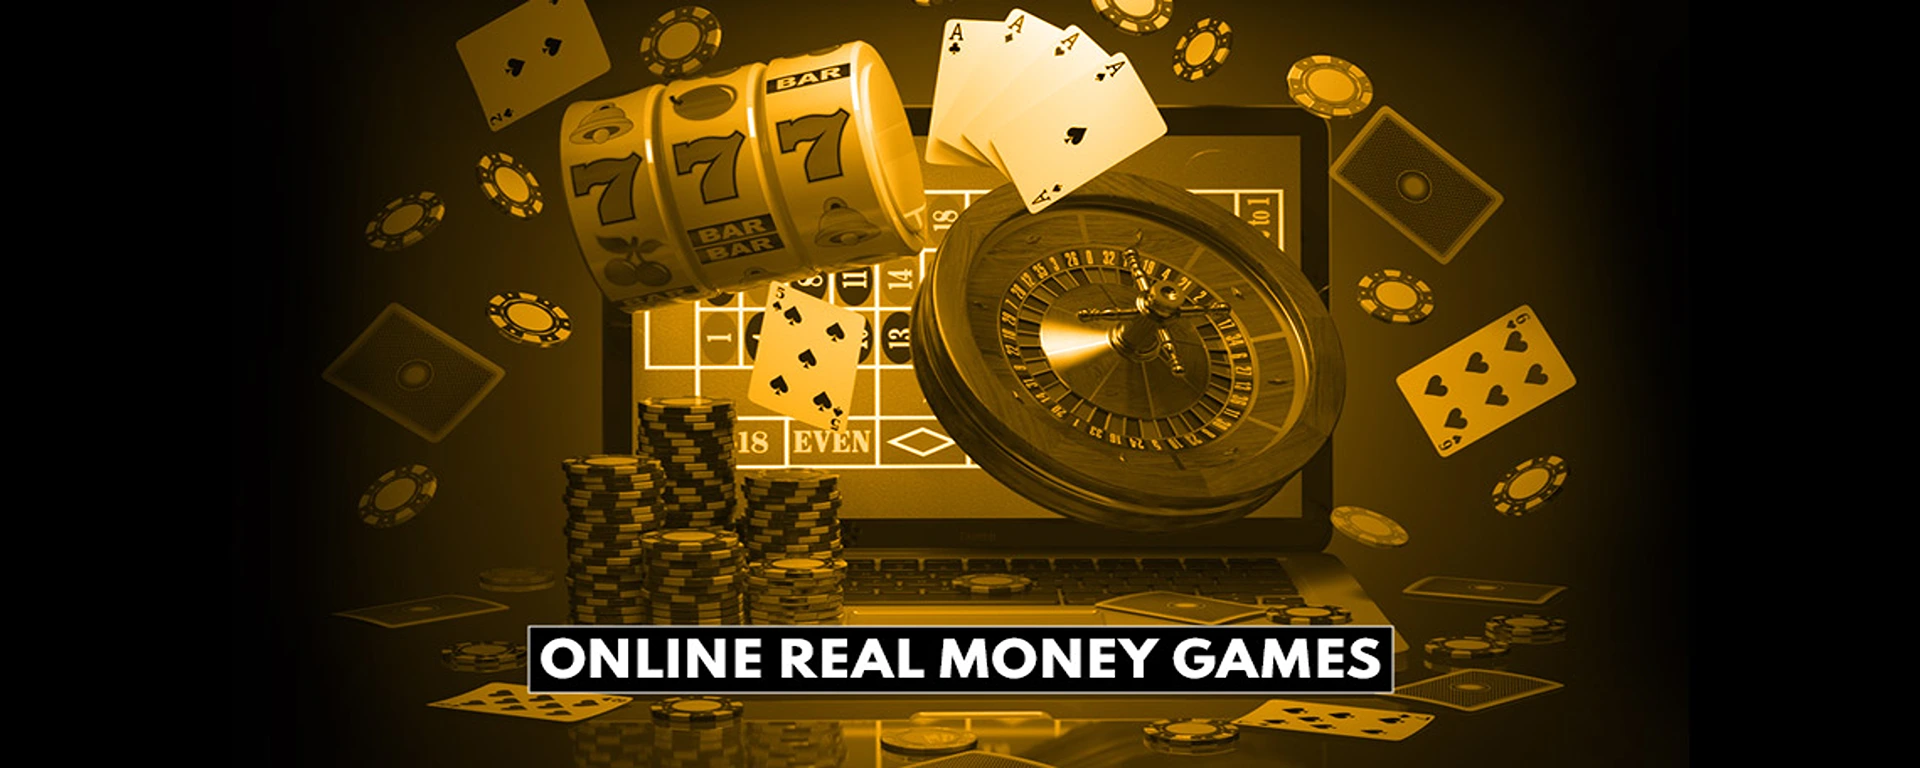 Online Real Money Games